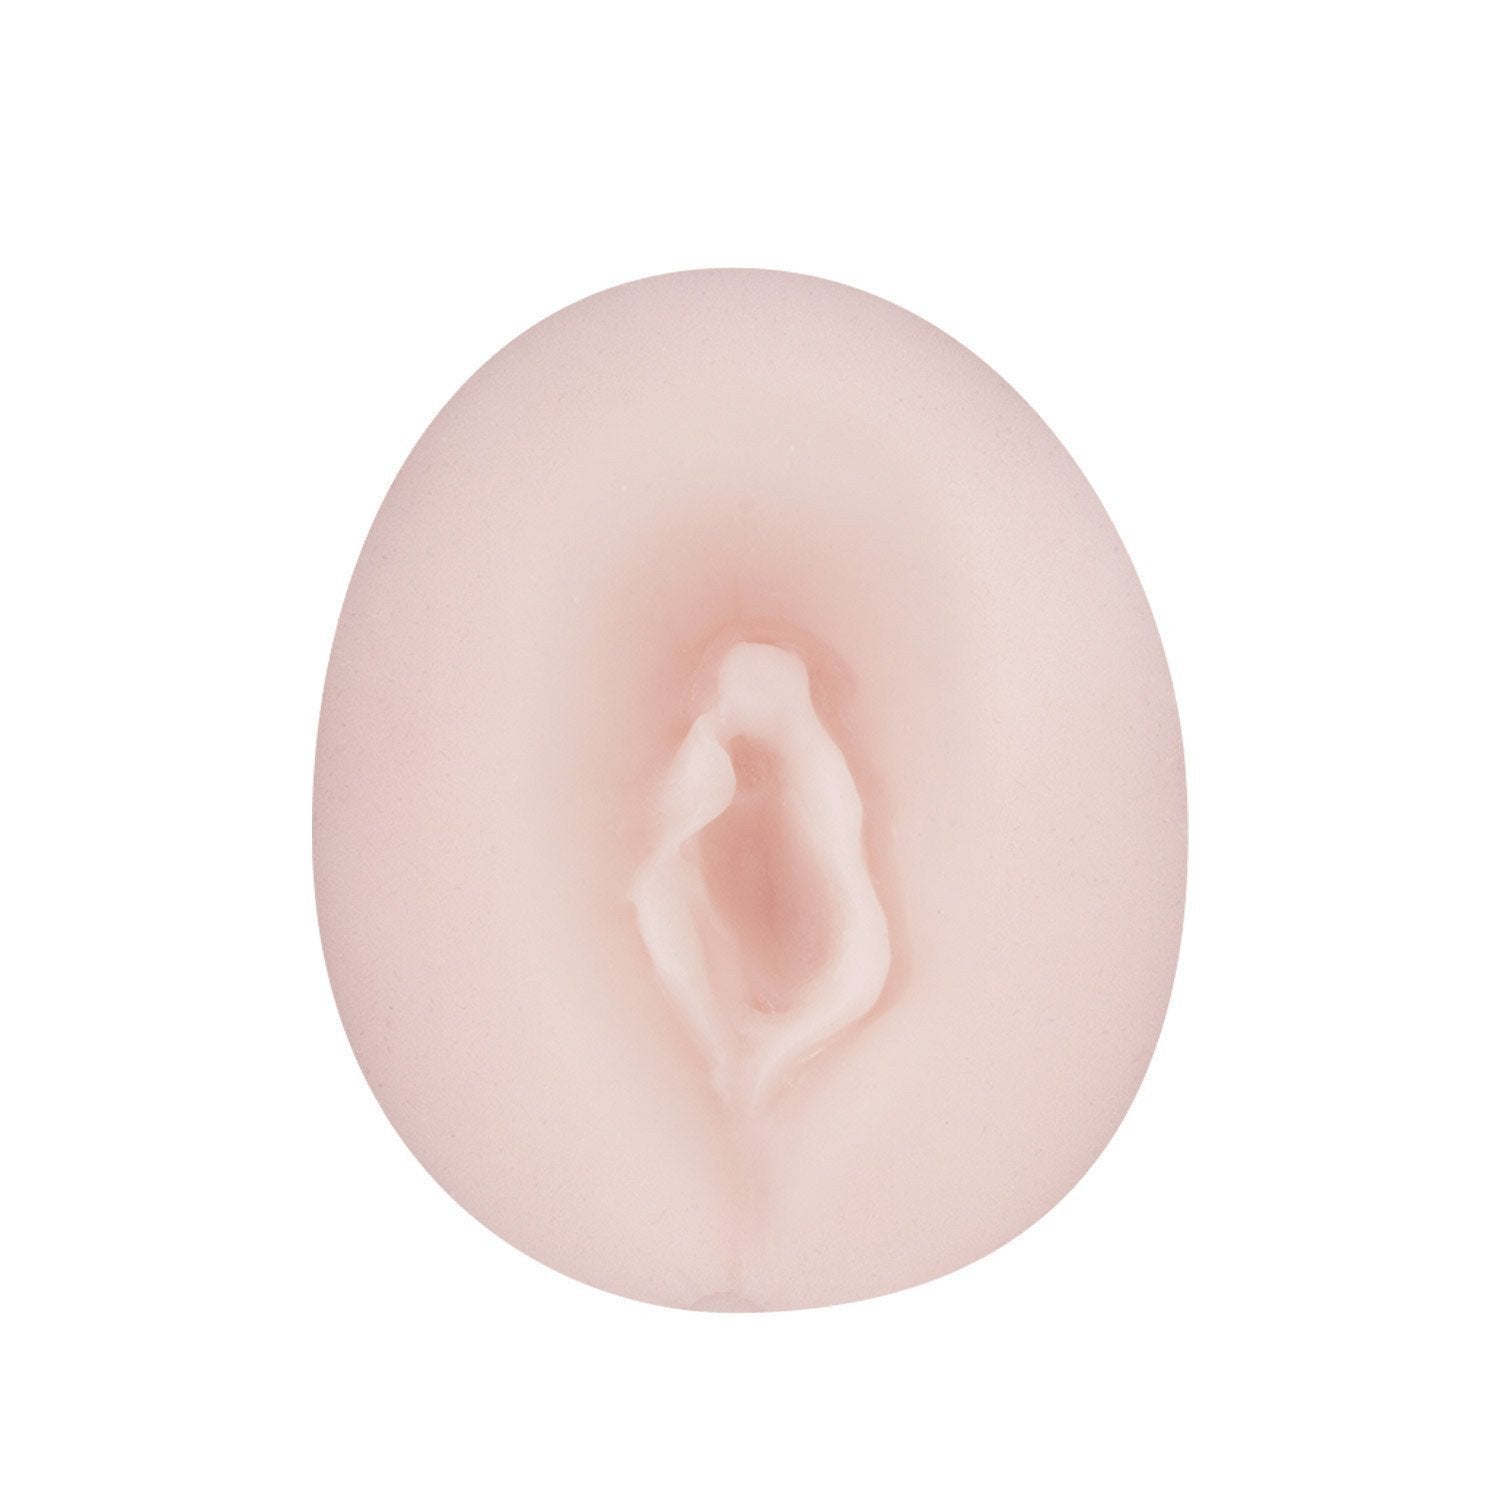 NPG - Virgin Hole Arisa Okouchi Onahole (Beige) -  Masturbator Vagina (Non Vibration)  Durio.sg